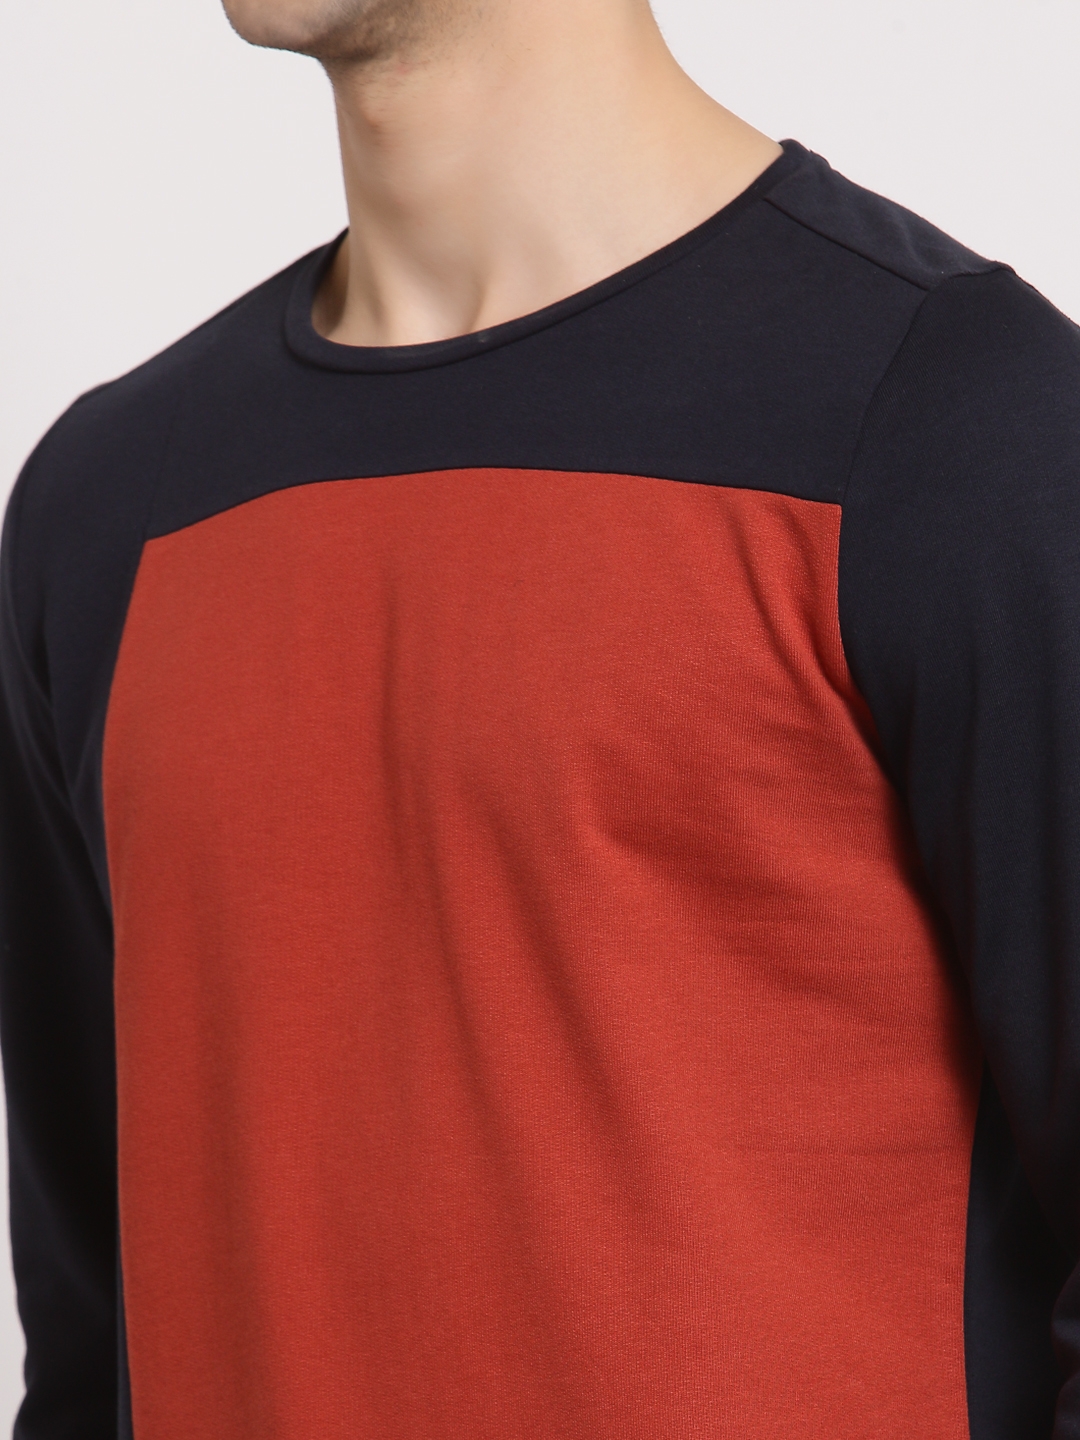 YOONOY | Men's Black & Red Cotton Colourblock Sweatshirts 4